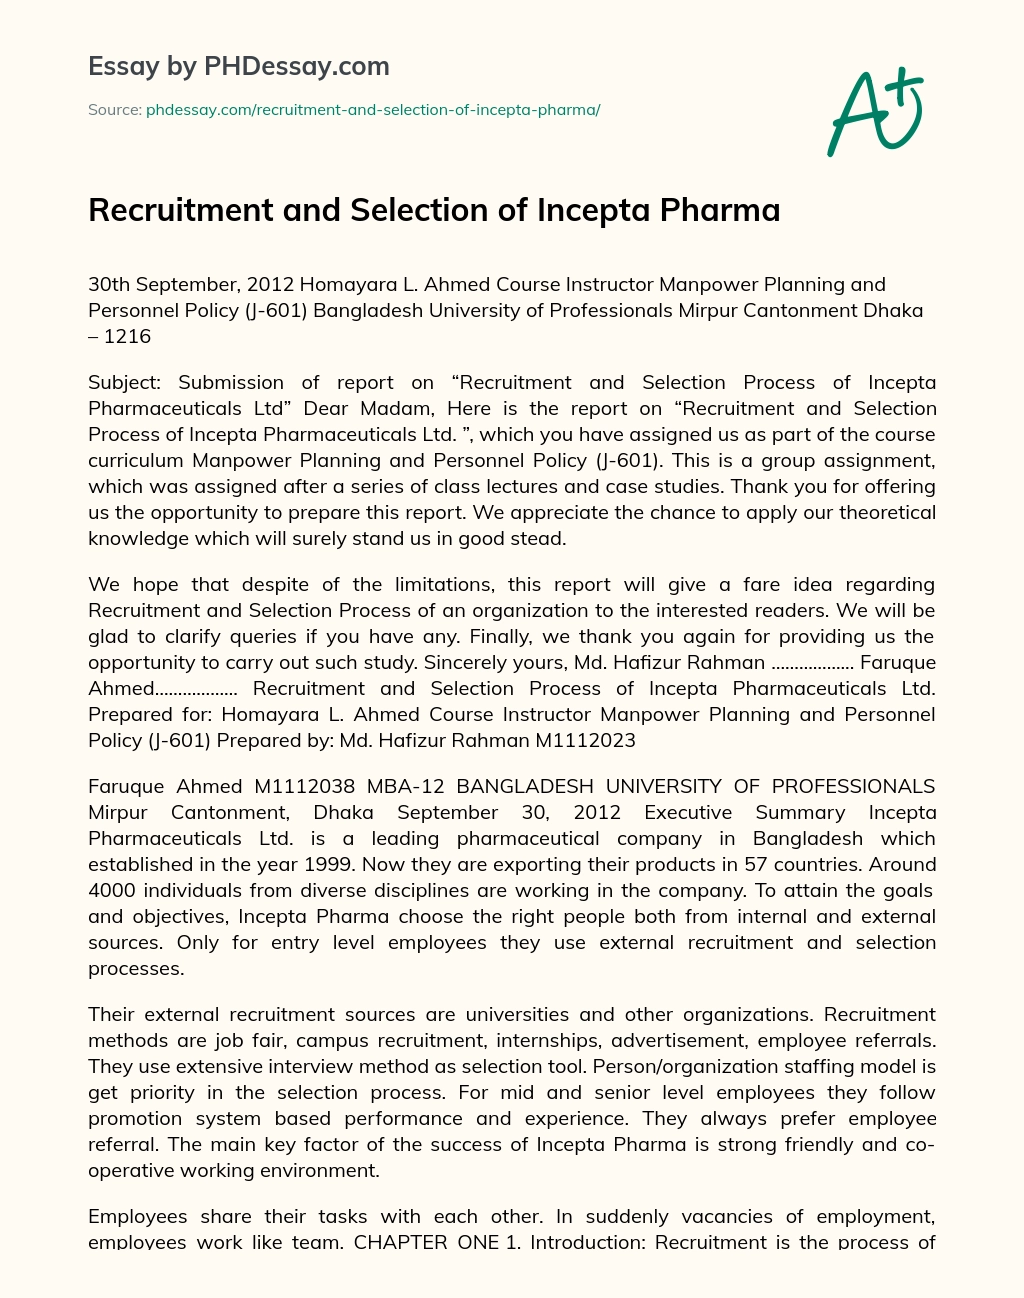 Recruitment and Selection of Incepta Pharma essay